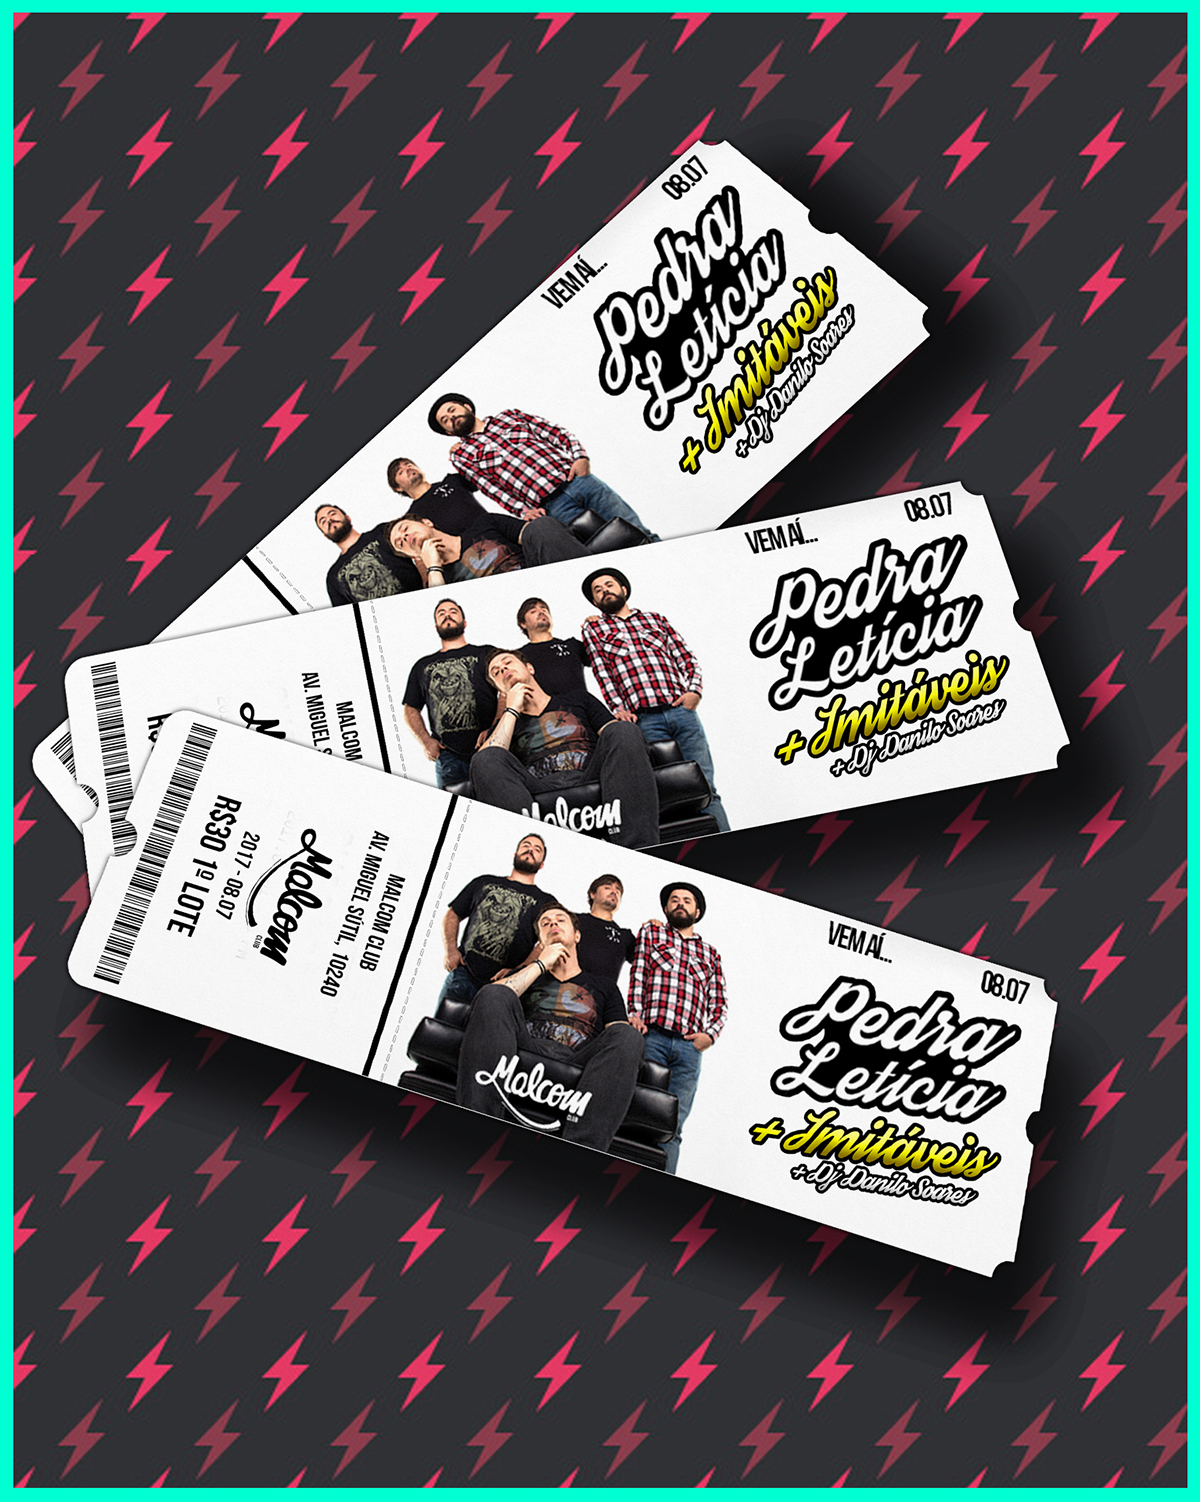 ticket ingressos Pedra Leticia Mockup rock Rock 'n Rock 'n Roll.